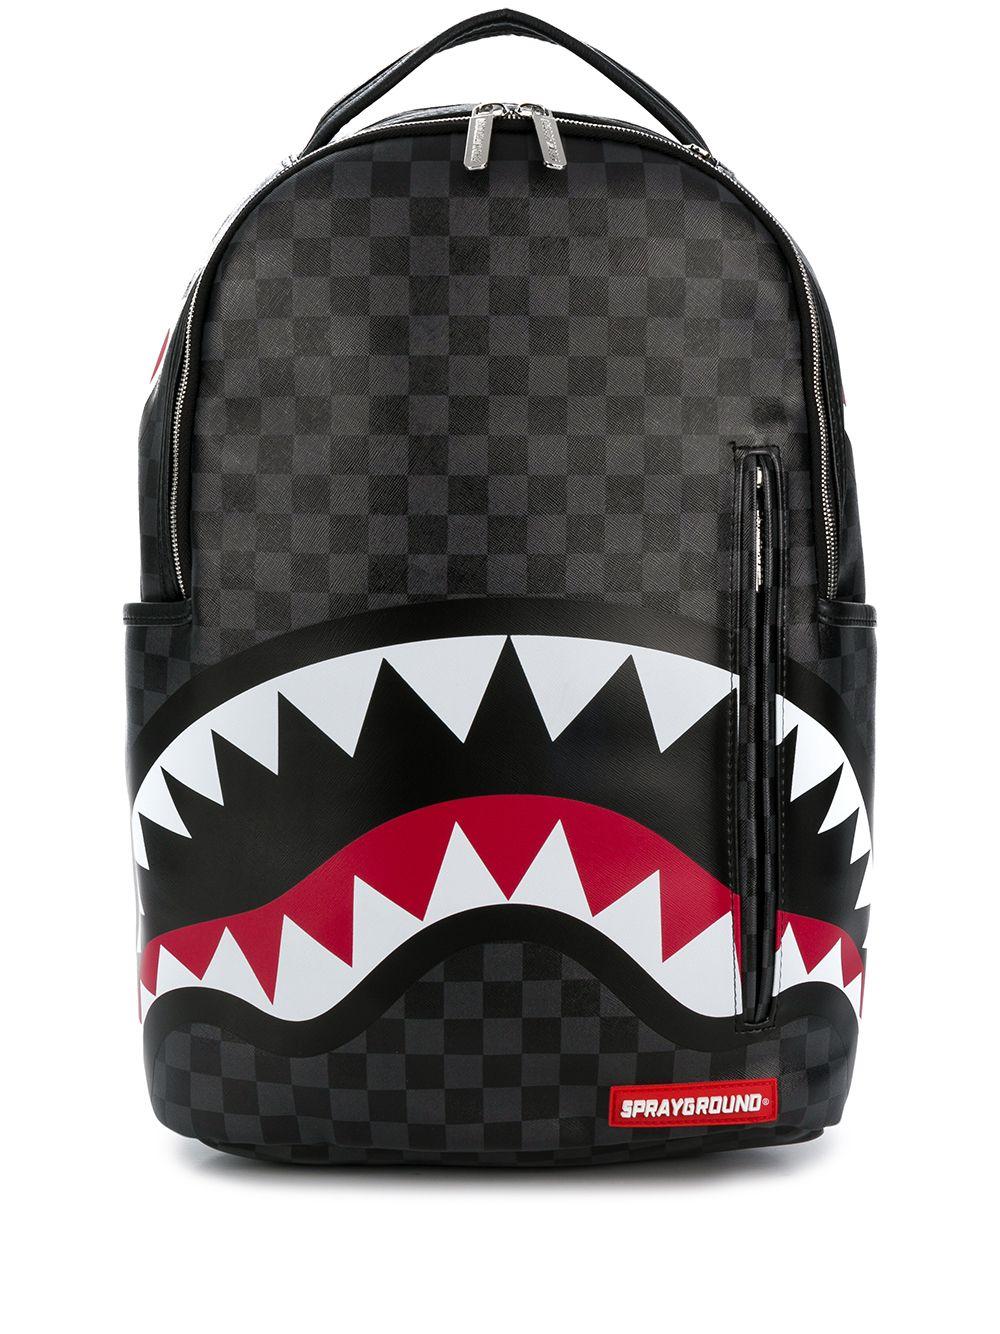 Sprayground Shark Backpack in Black - Lyst